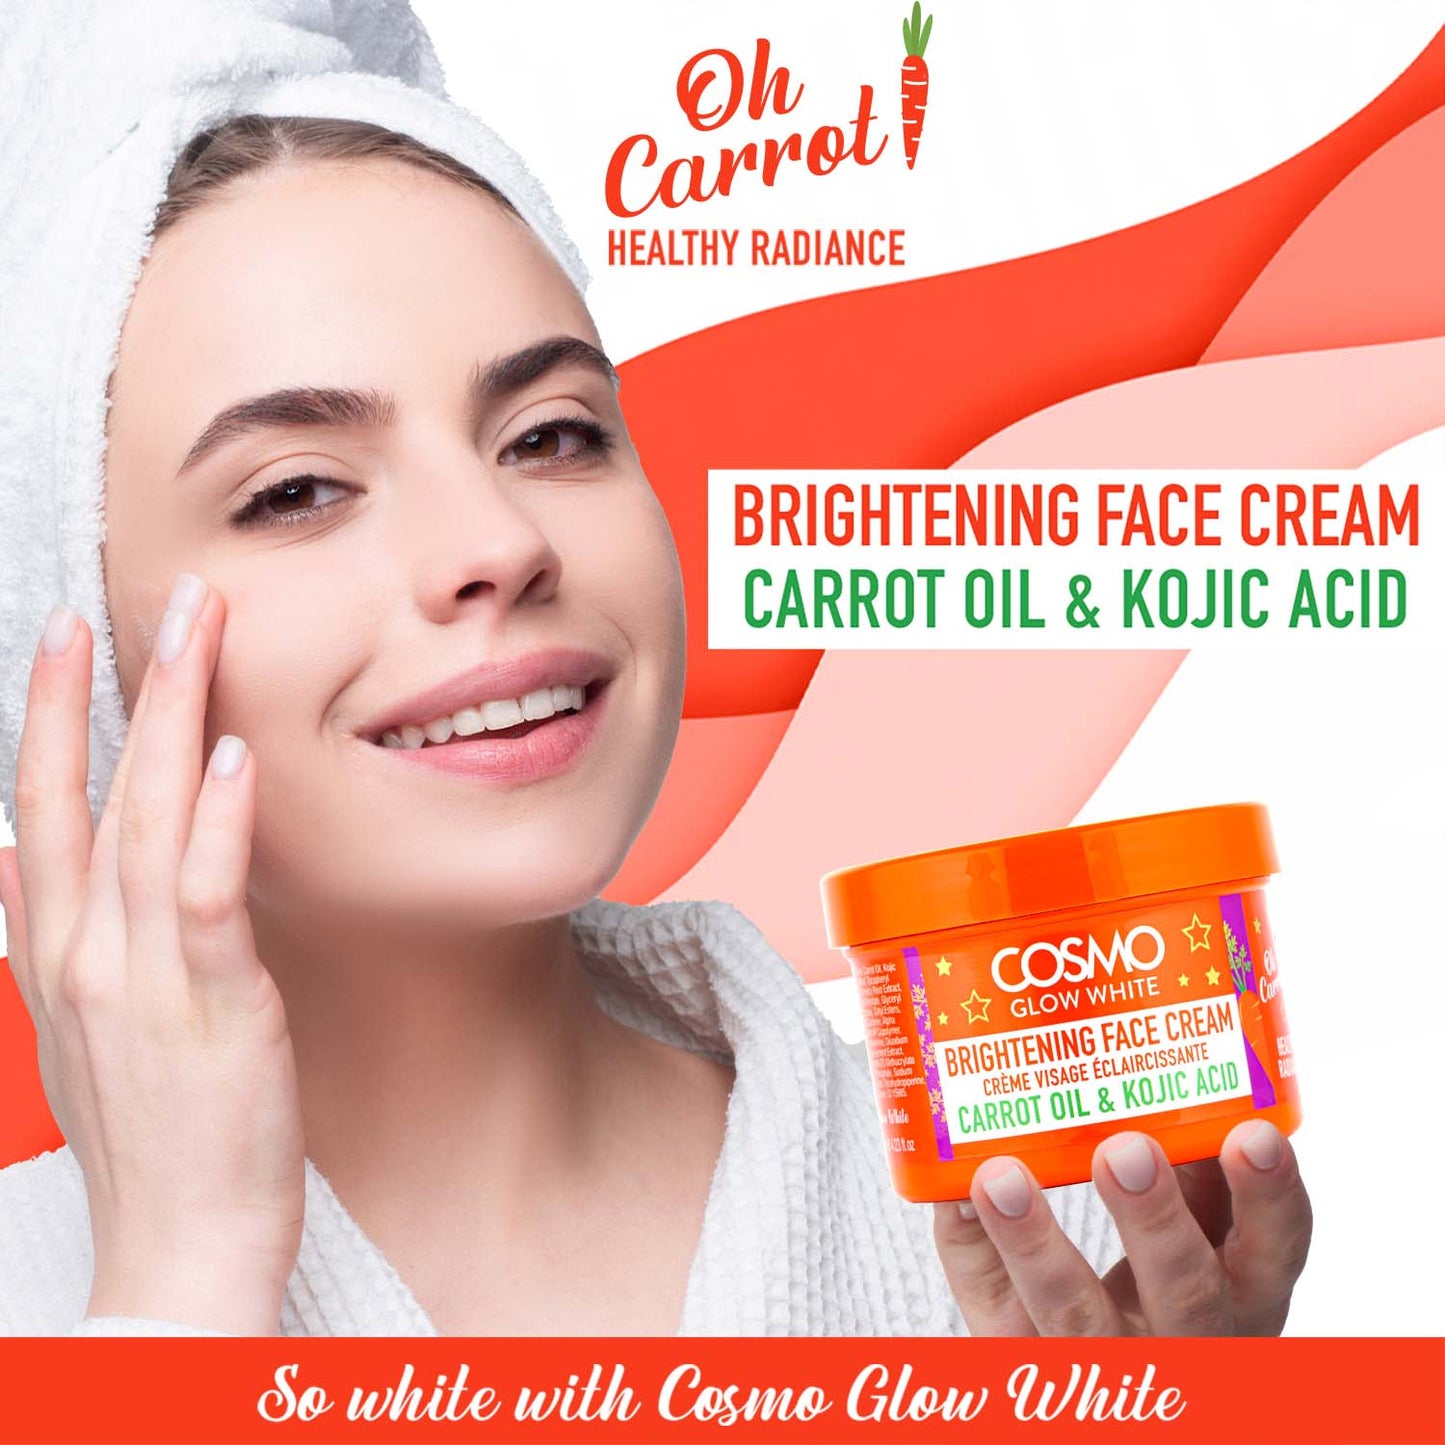 Cosmo Glow White - Brightening Face Cream - 125ML